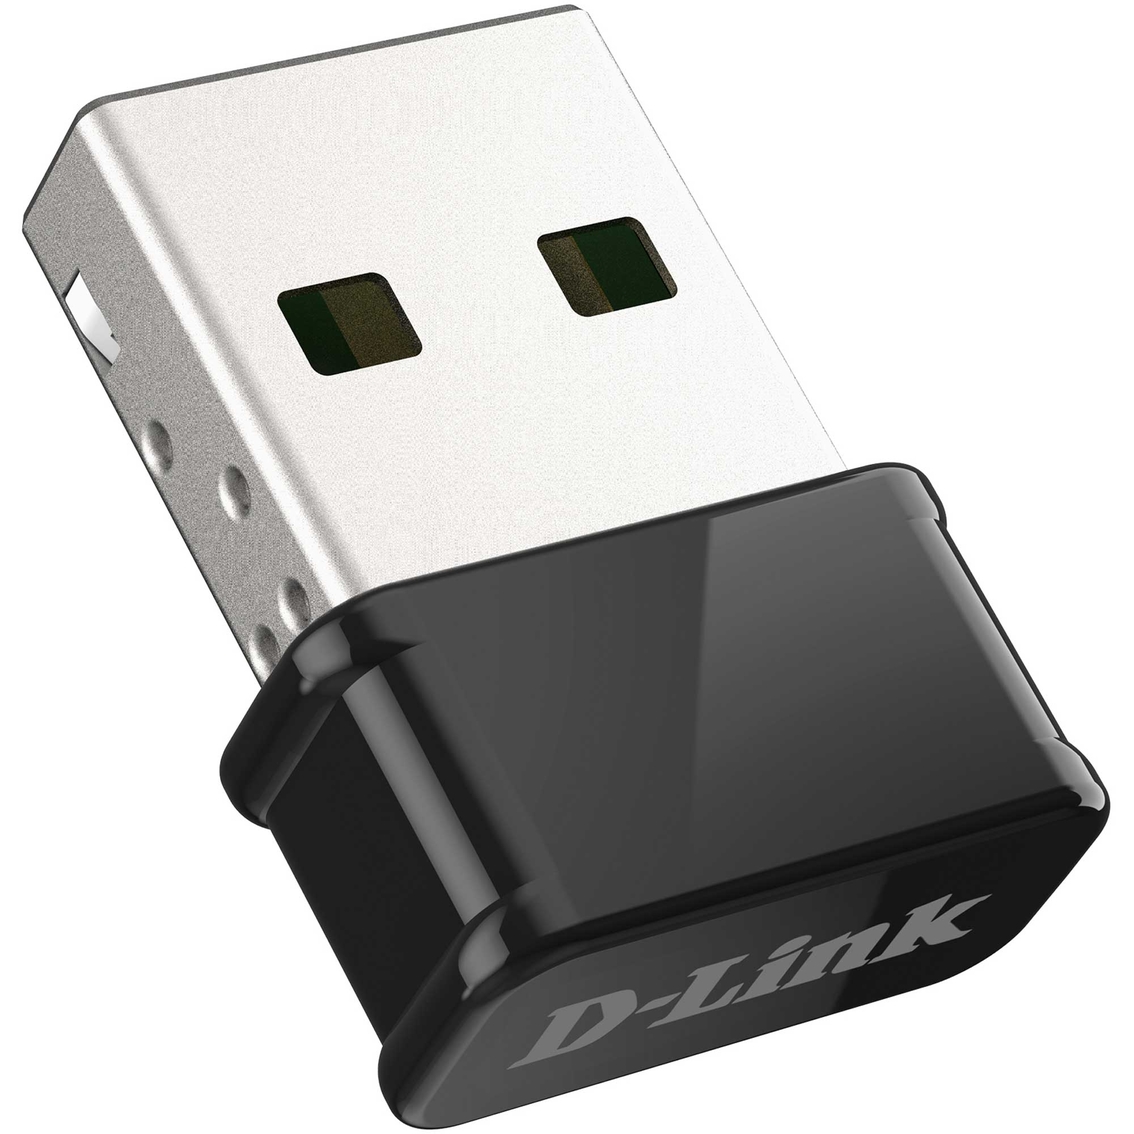 D-Link AC1300 MU-MIMO WiFi Nano USB Adapter - Image 3 of 4